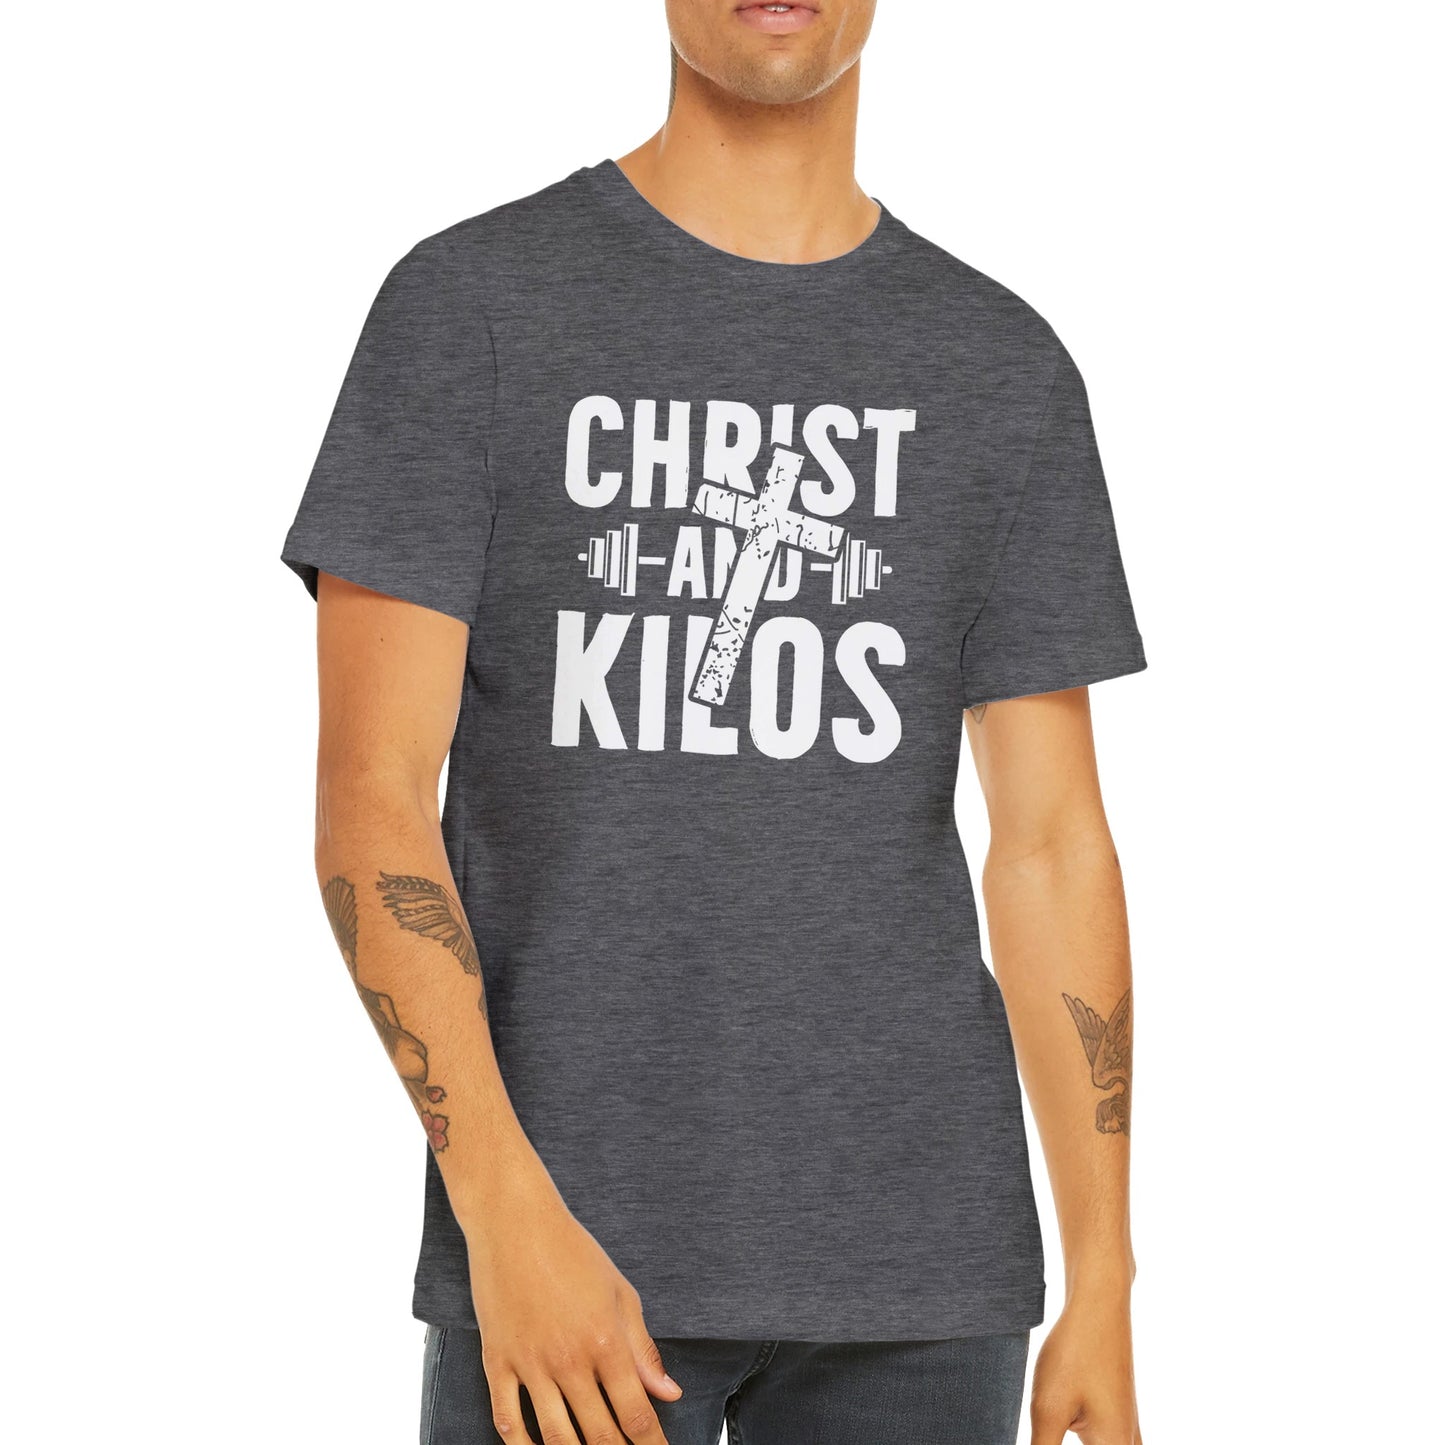 "Christ and Kilos" Premium Christian Crewneck T-shirt